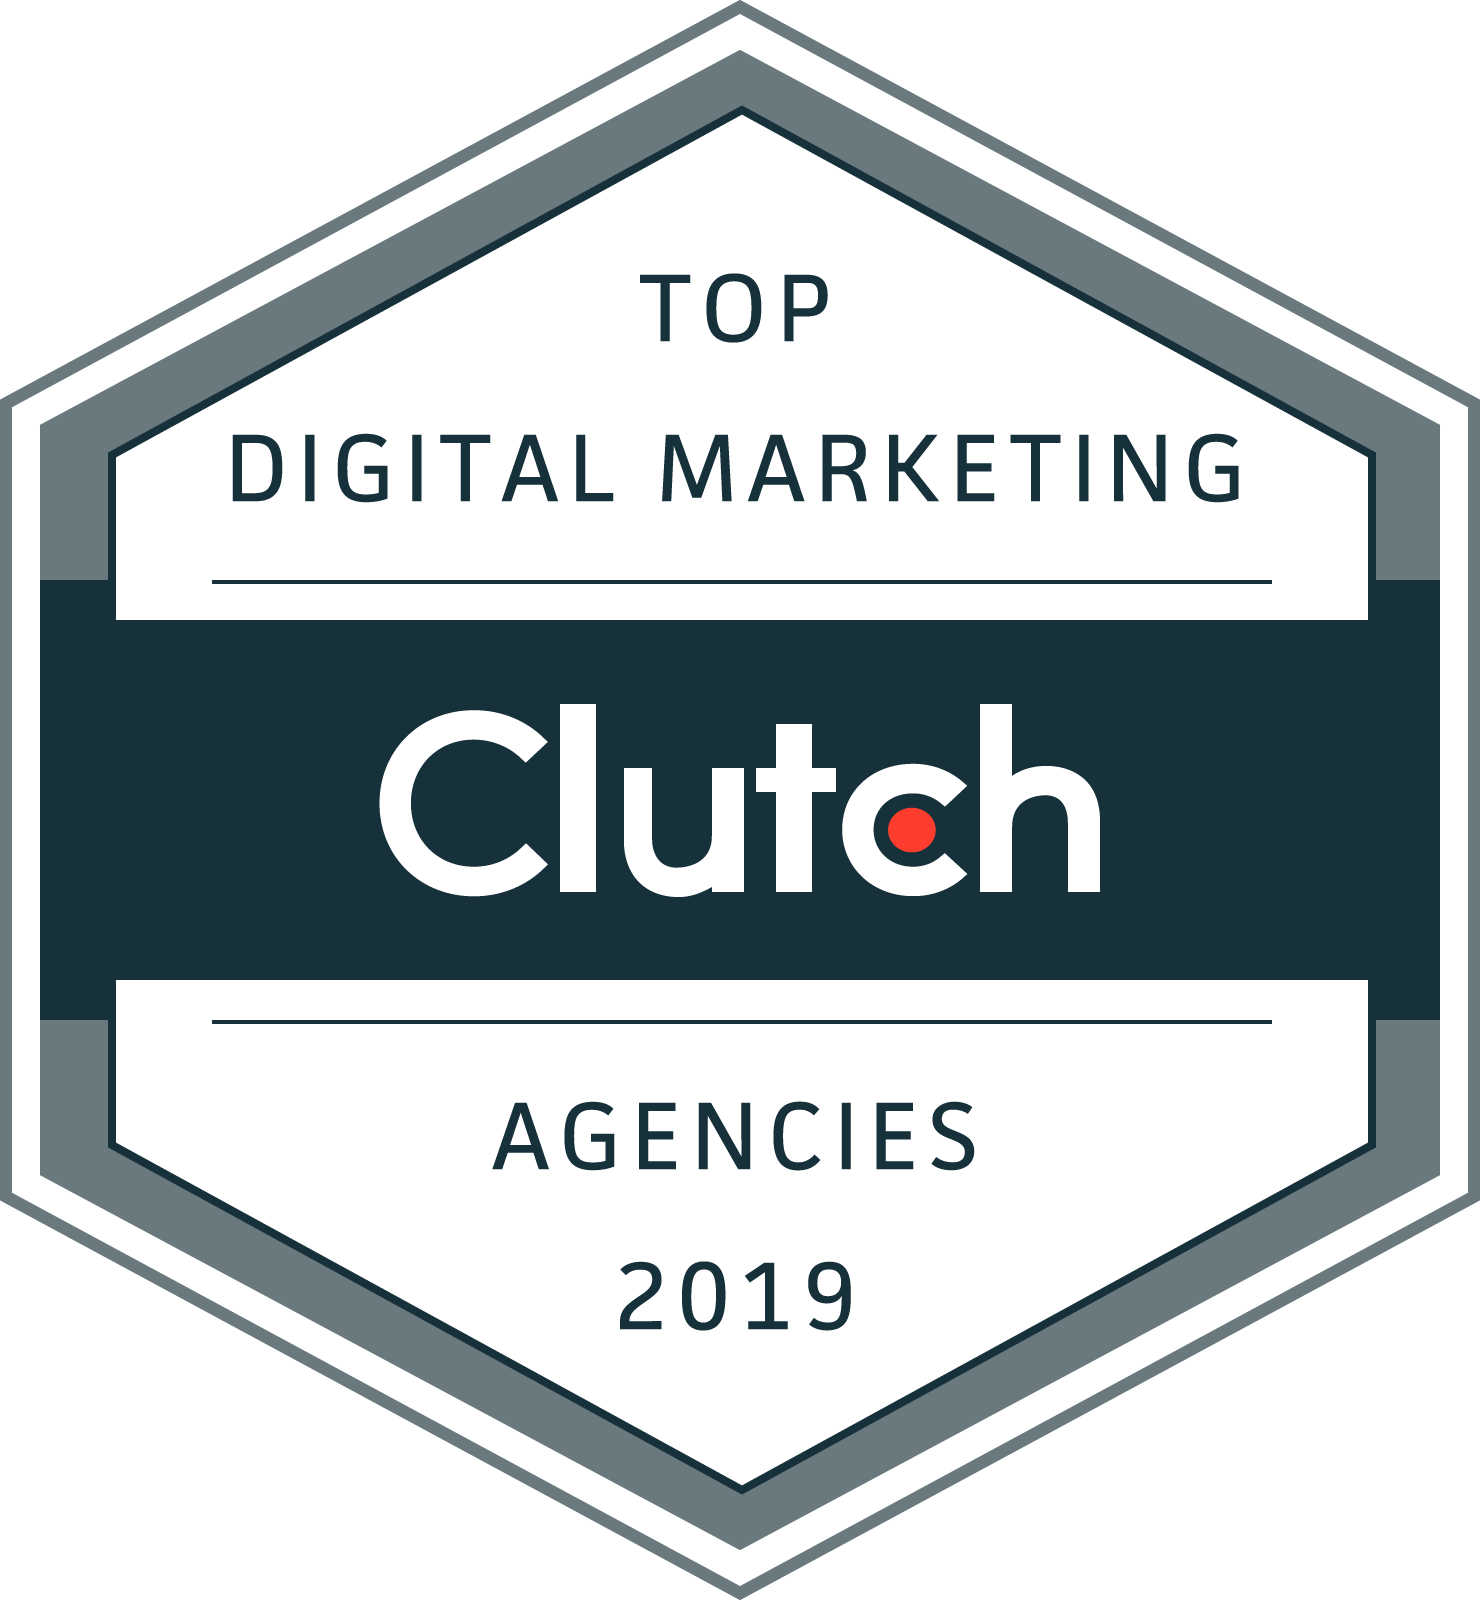 SUF Digital Top digital marketing agency